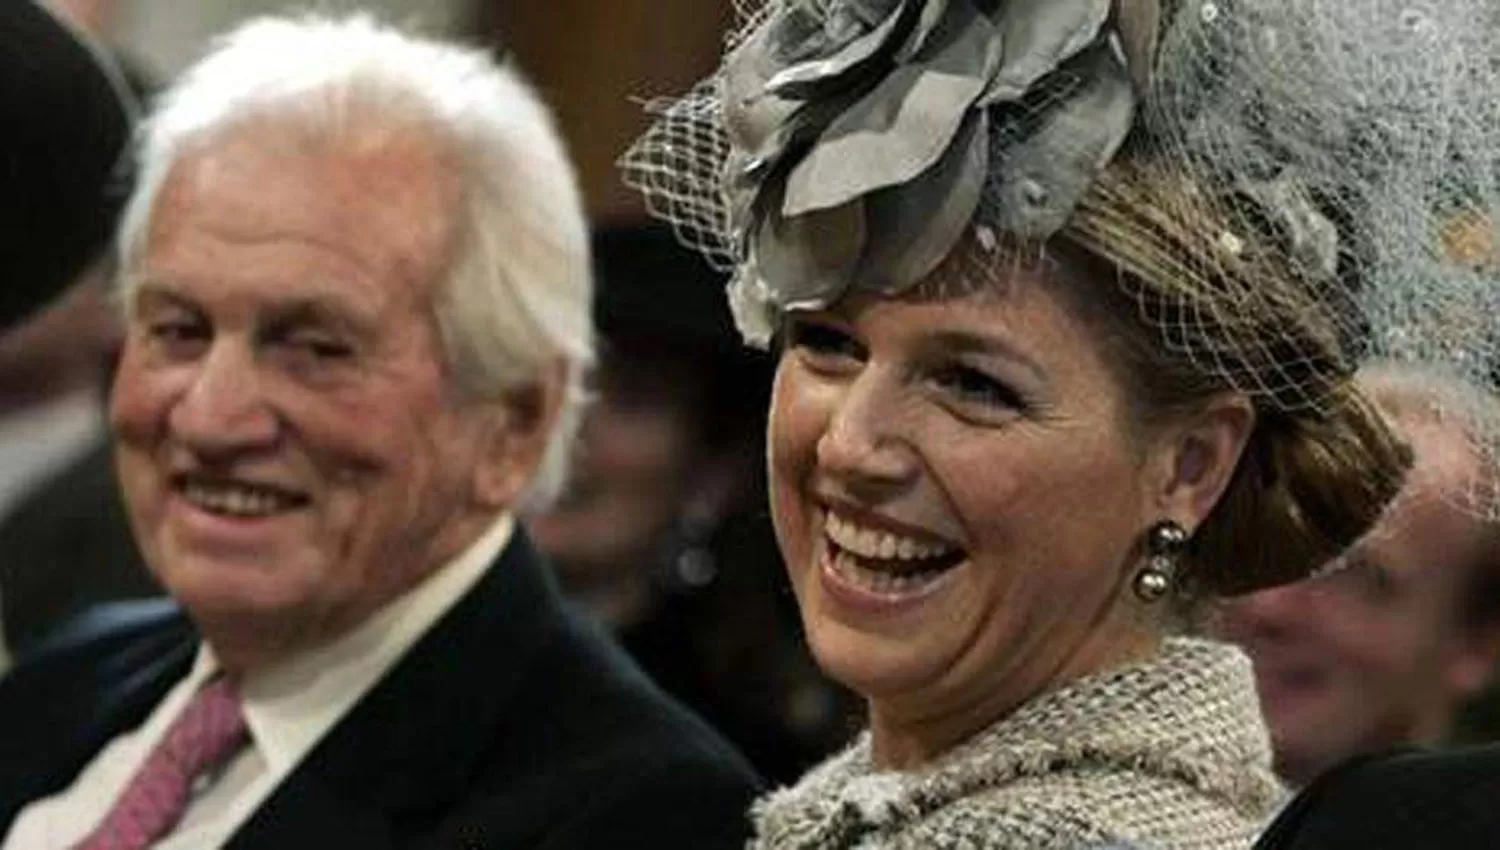 Jorge Zorreguieta, en una foto junto a su hija, la reina Máxima de Holanda. ARCHIVO LA GACETA